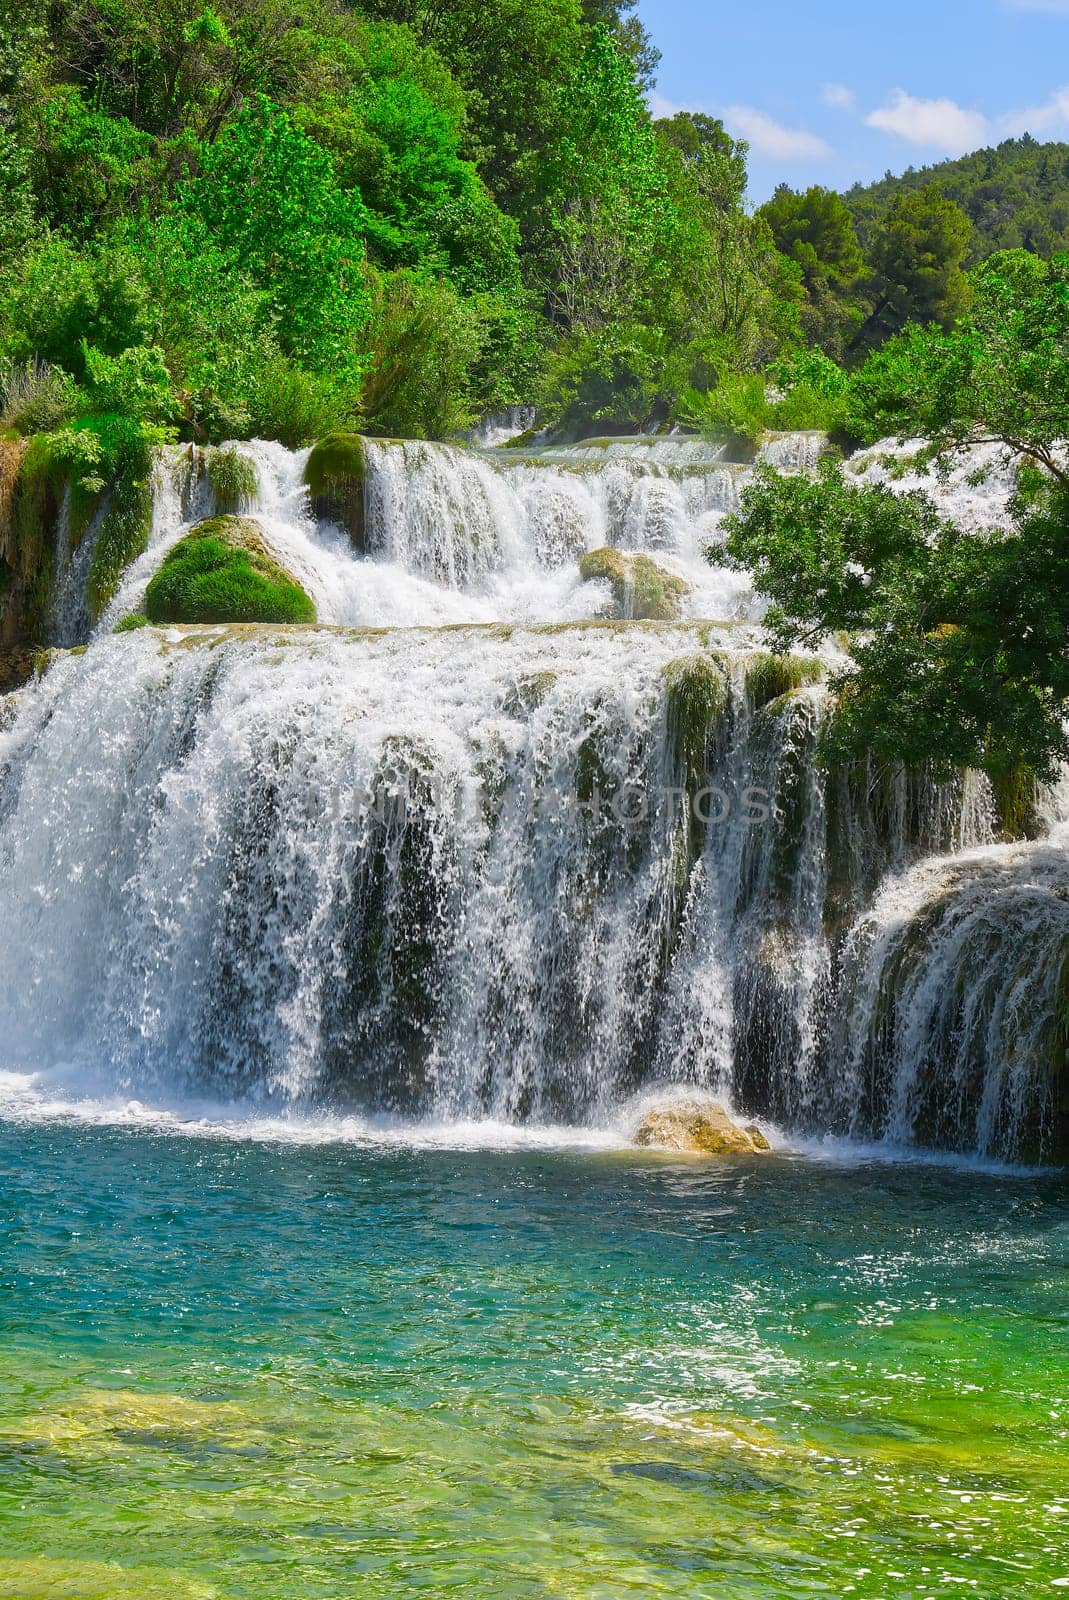 Beautiful Waterfall background in sunny summer day. Beautiful Waterfall In Krka National Park - Croatia, Europe. Krka river waterfalls in the Krka National Park